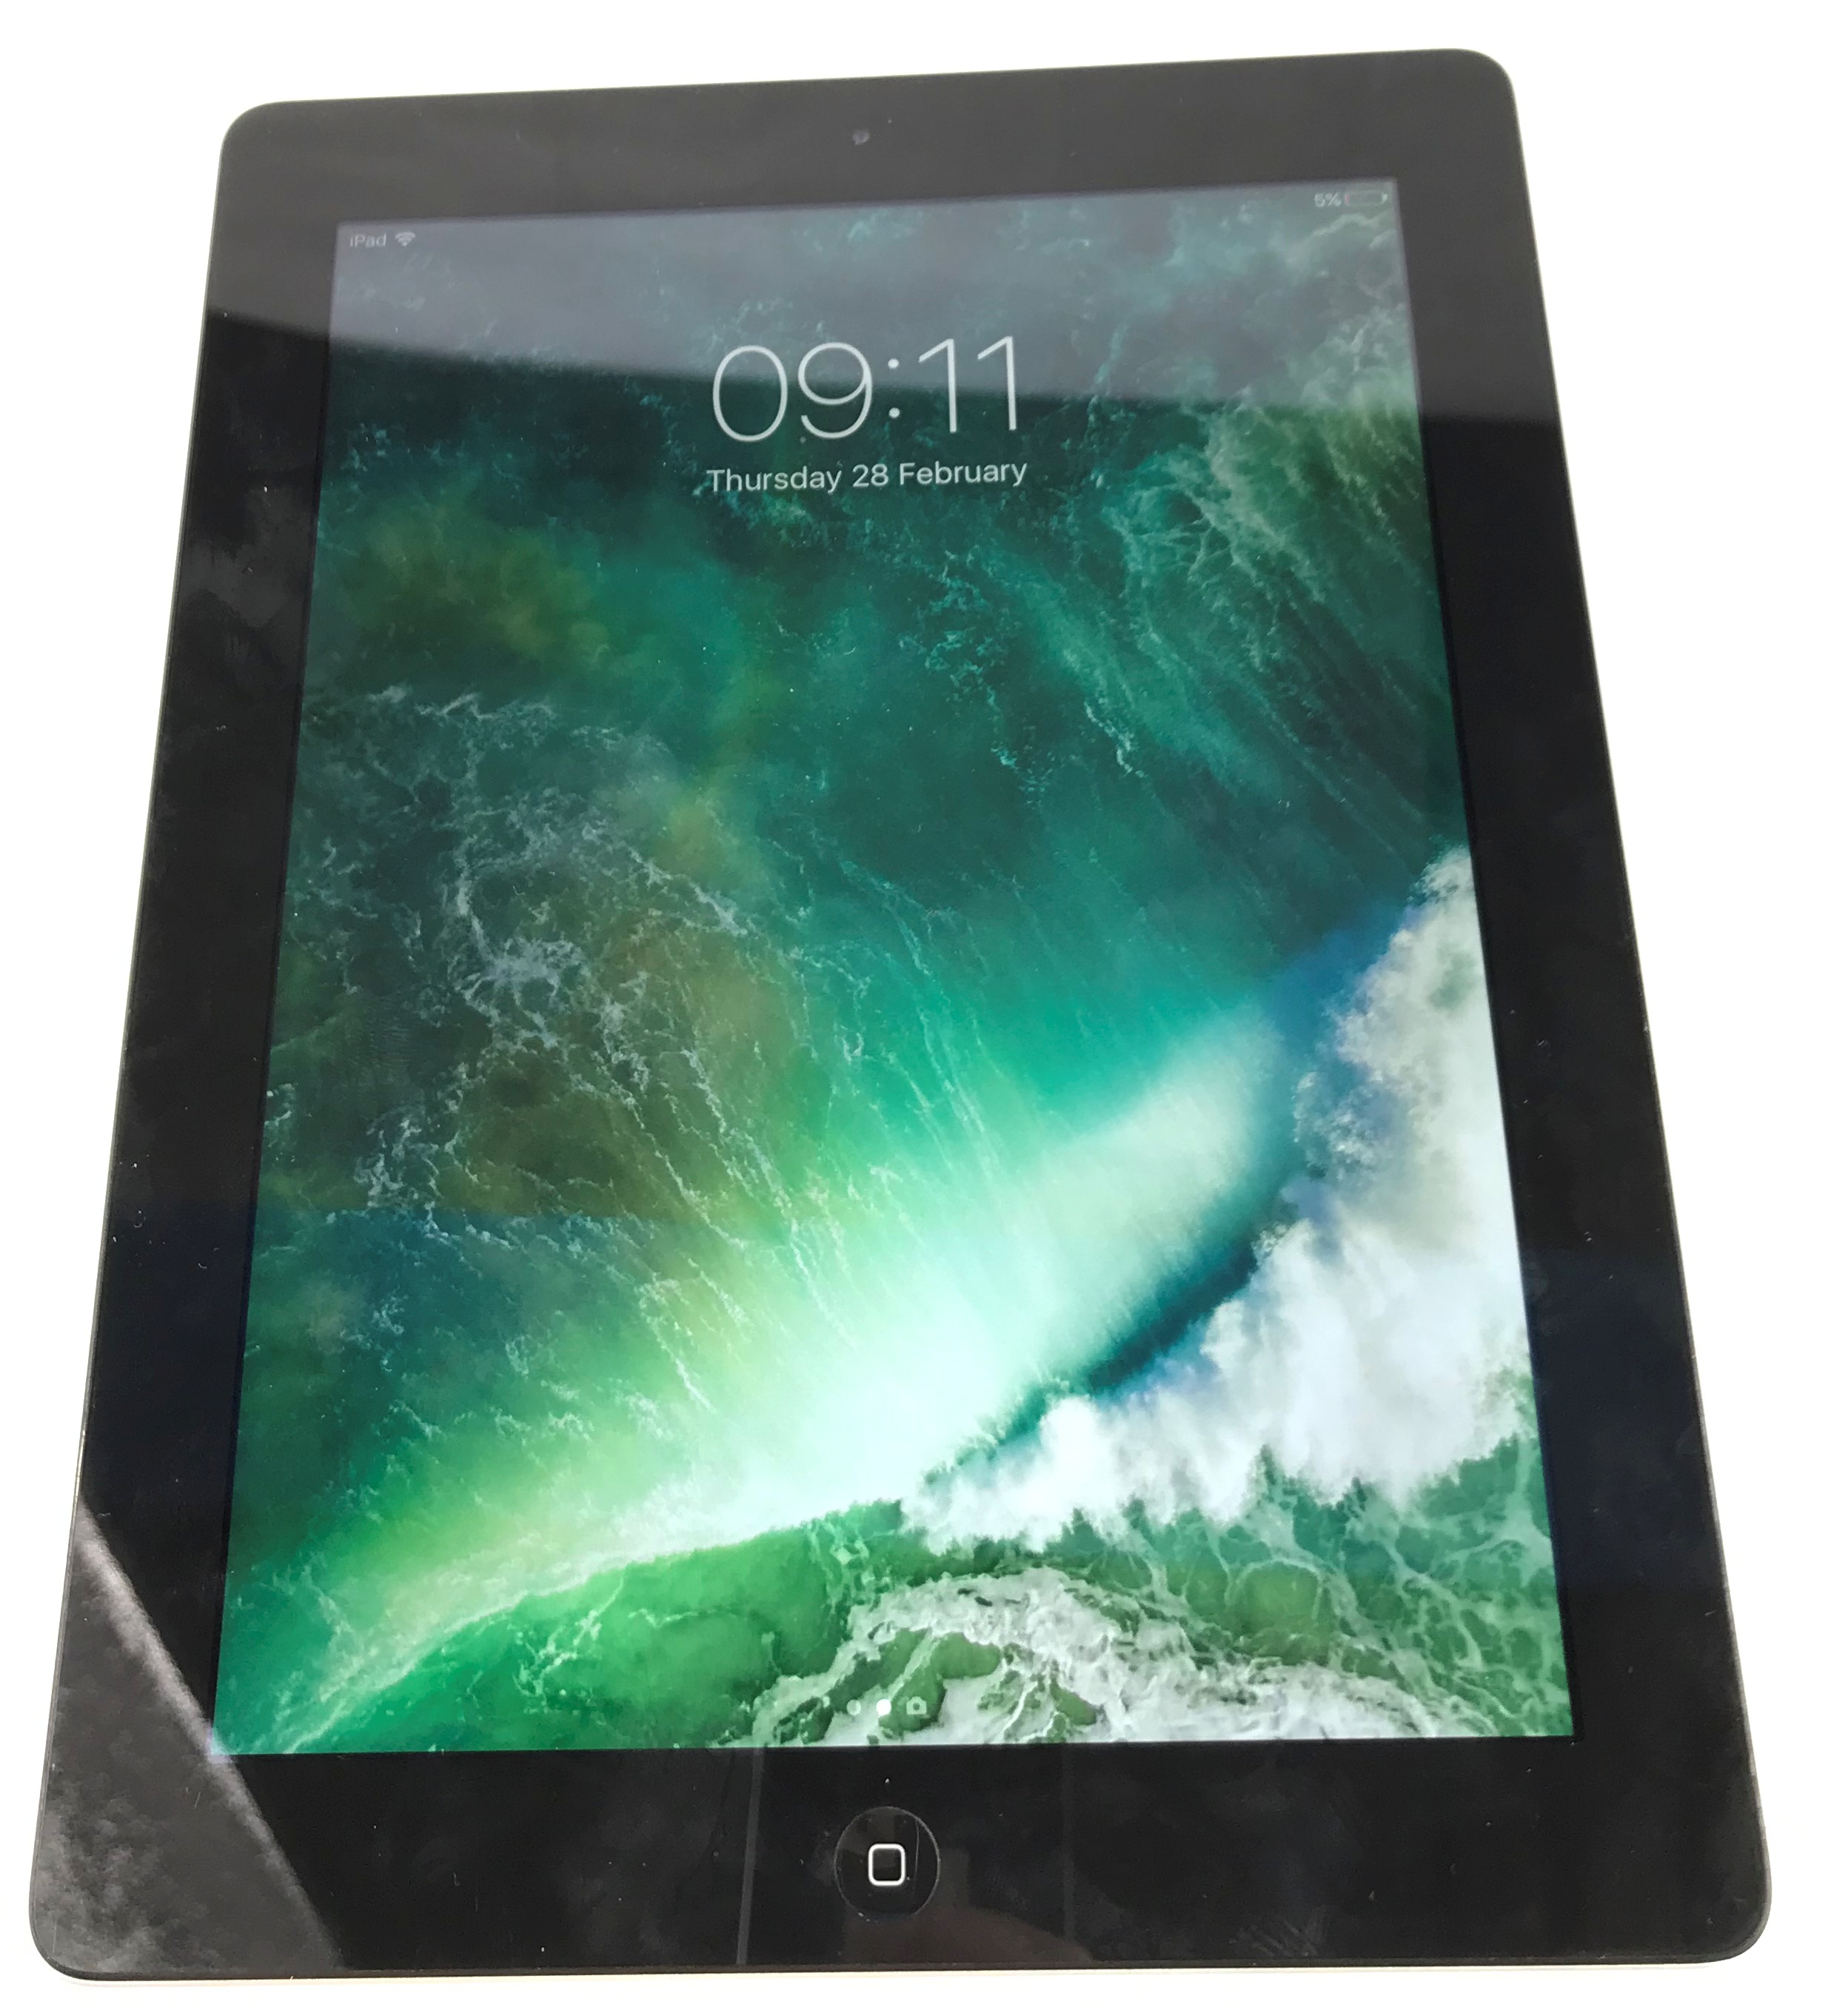 Apple iPad 4. Model A1458 16GB, WiFi Space Grey 885909772148 eBay